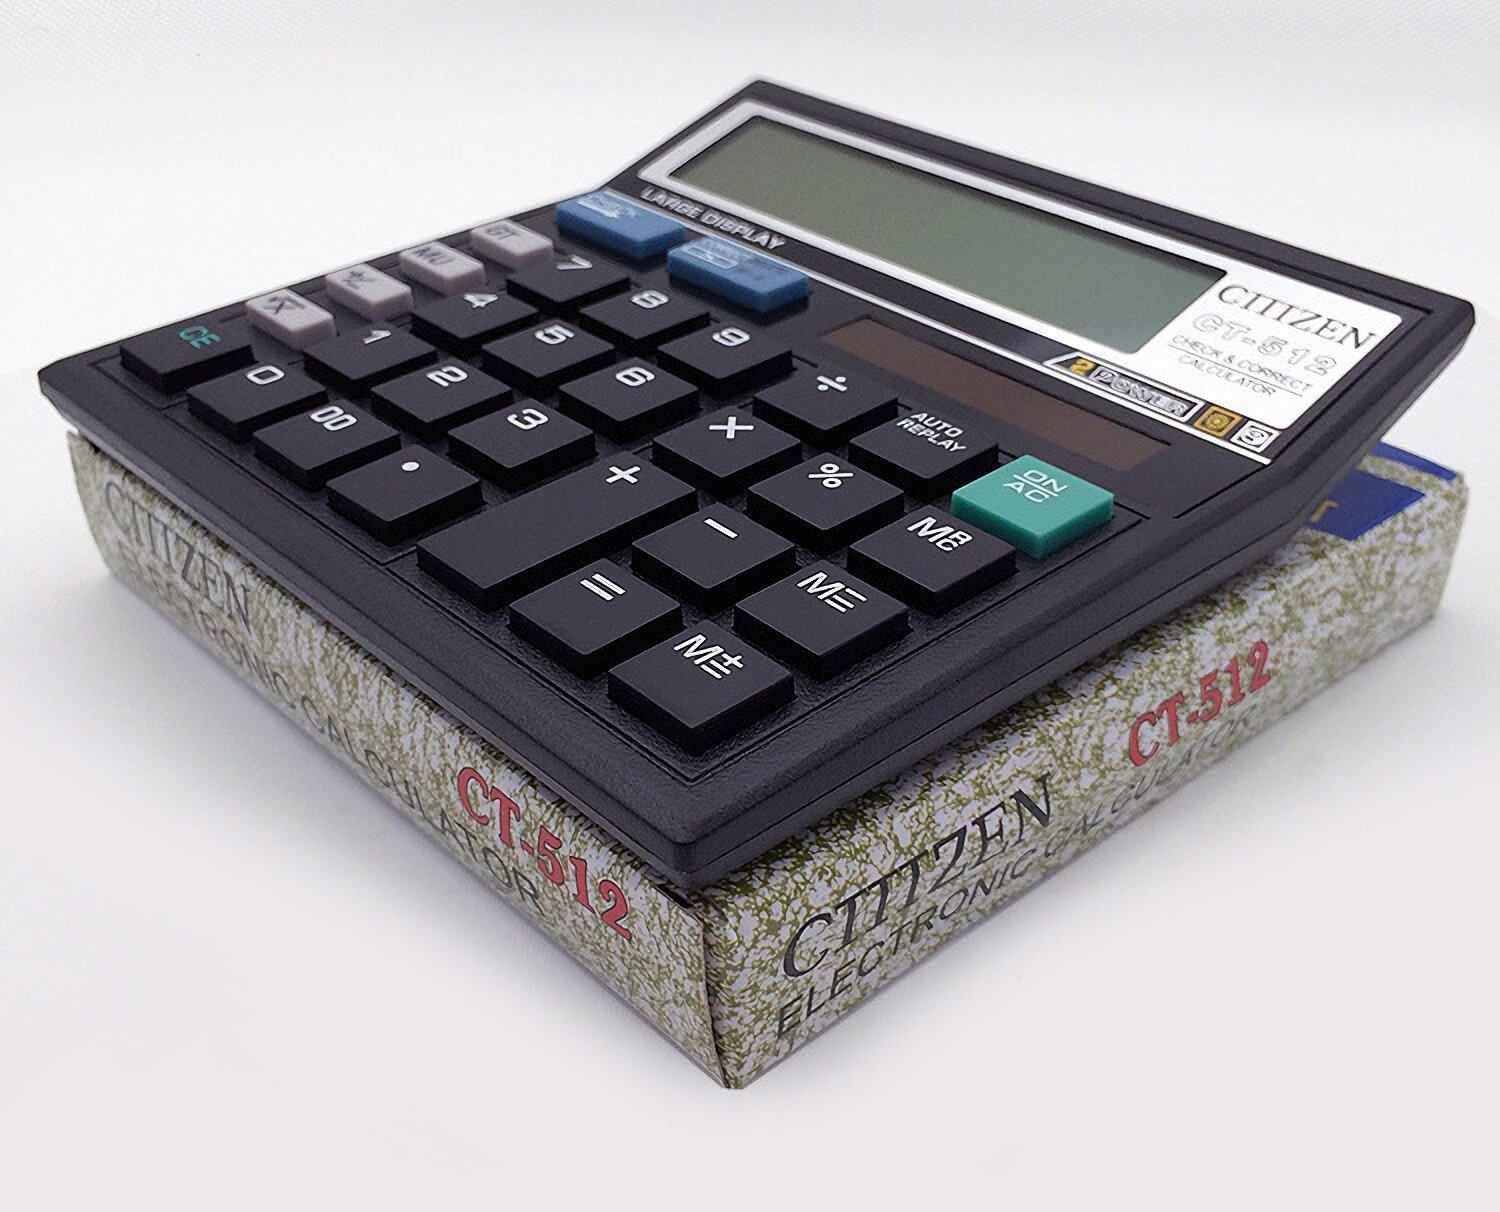 CT-512 Solar Calculator 12 Digital Calculator Black Calculator